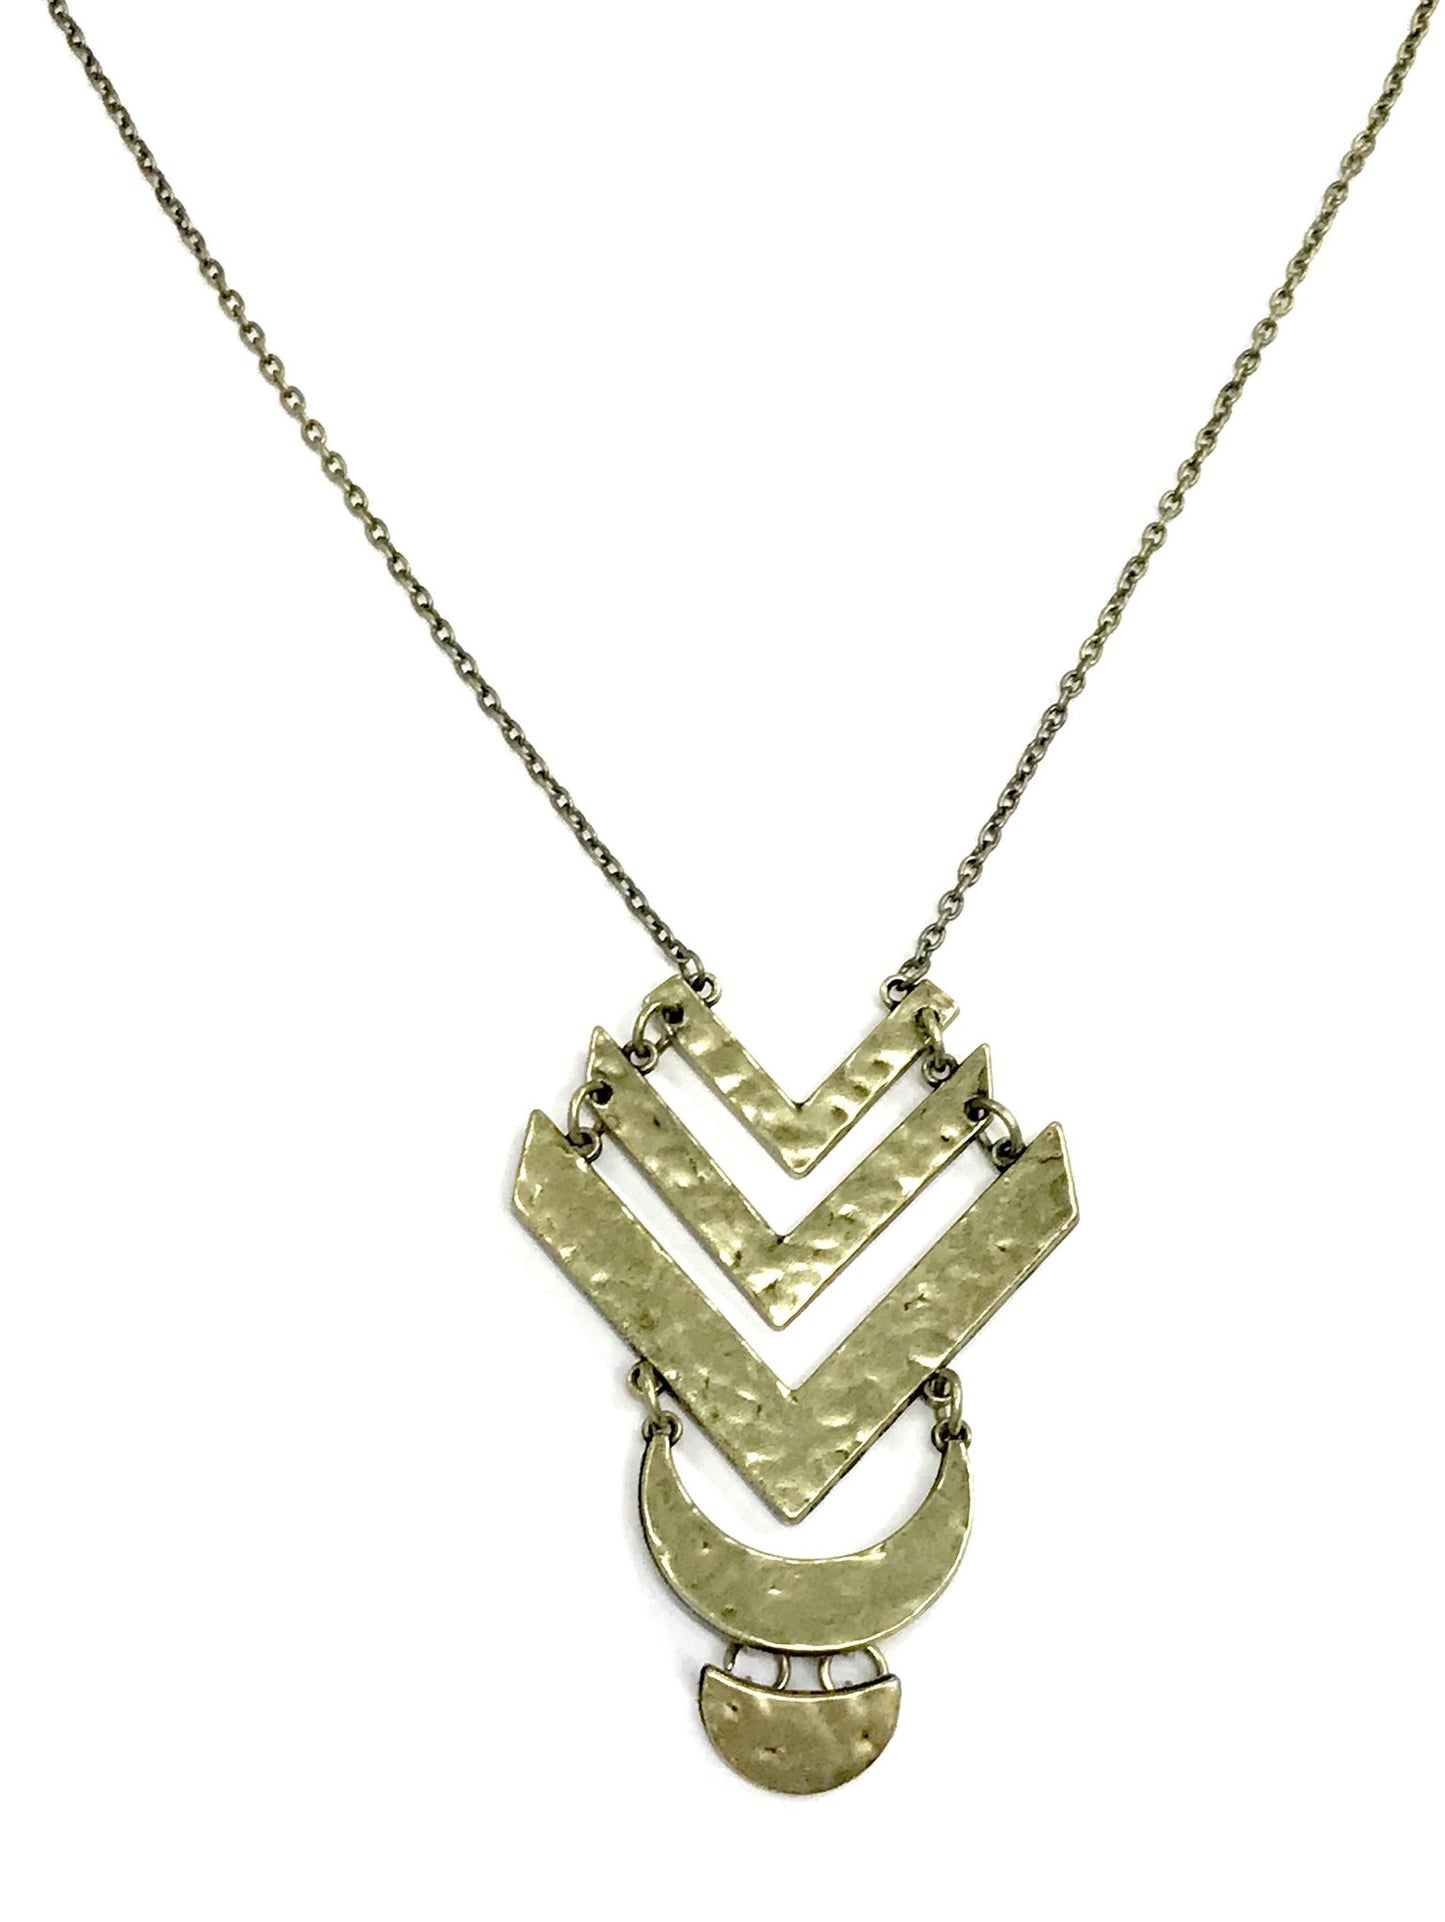 Artisan Edge Brass Necklace - Daria's Blings N Things